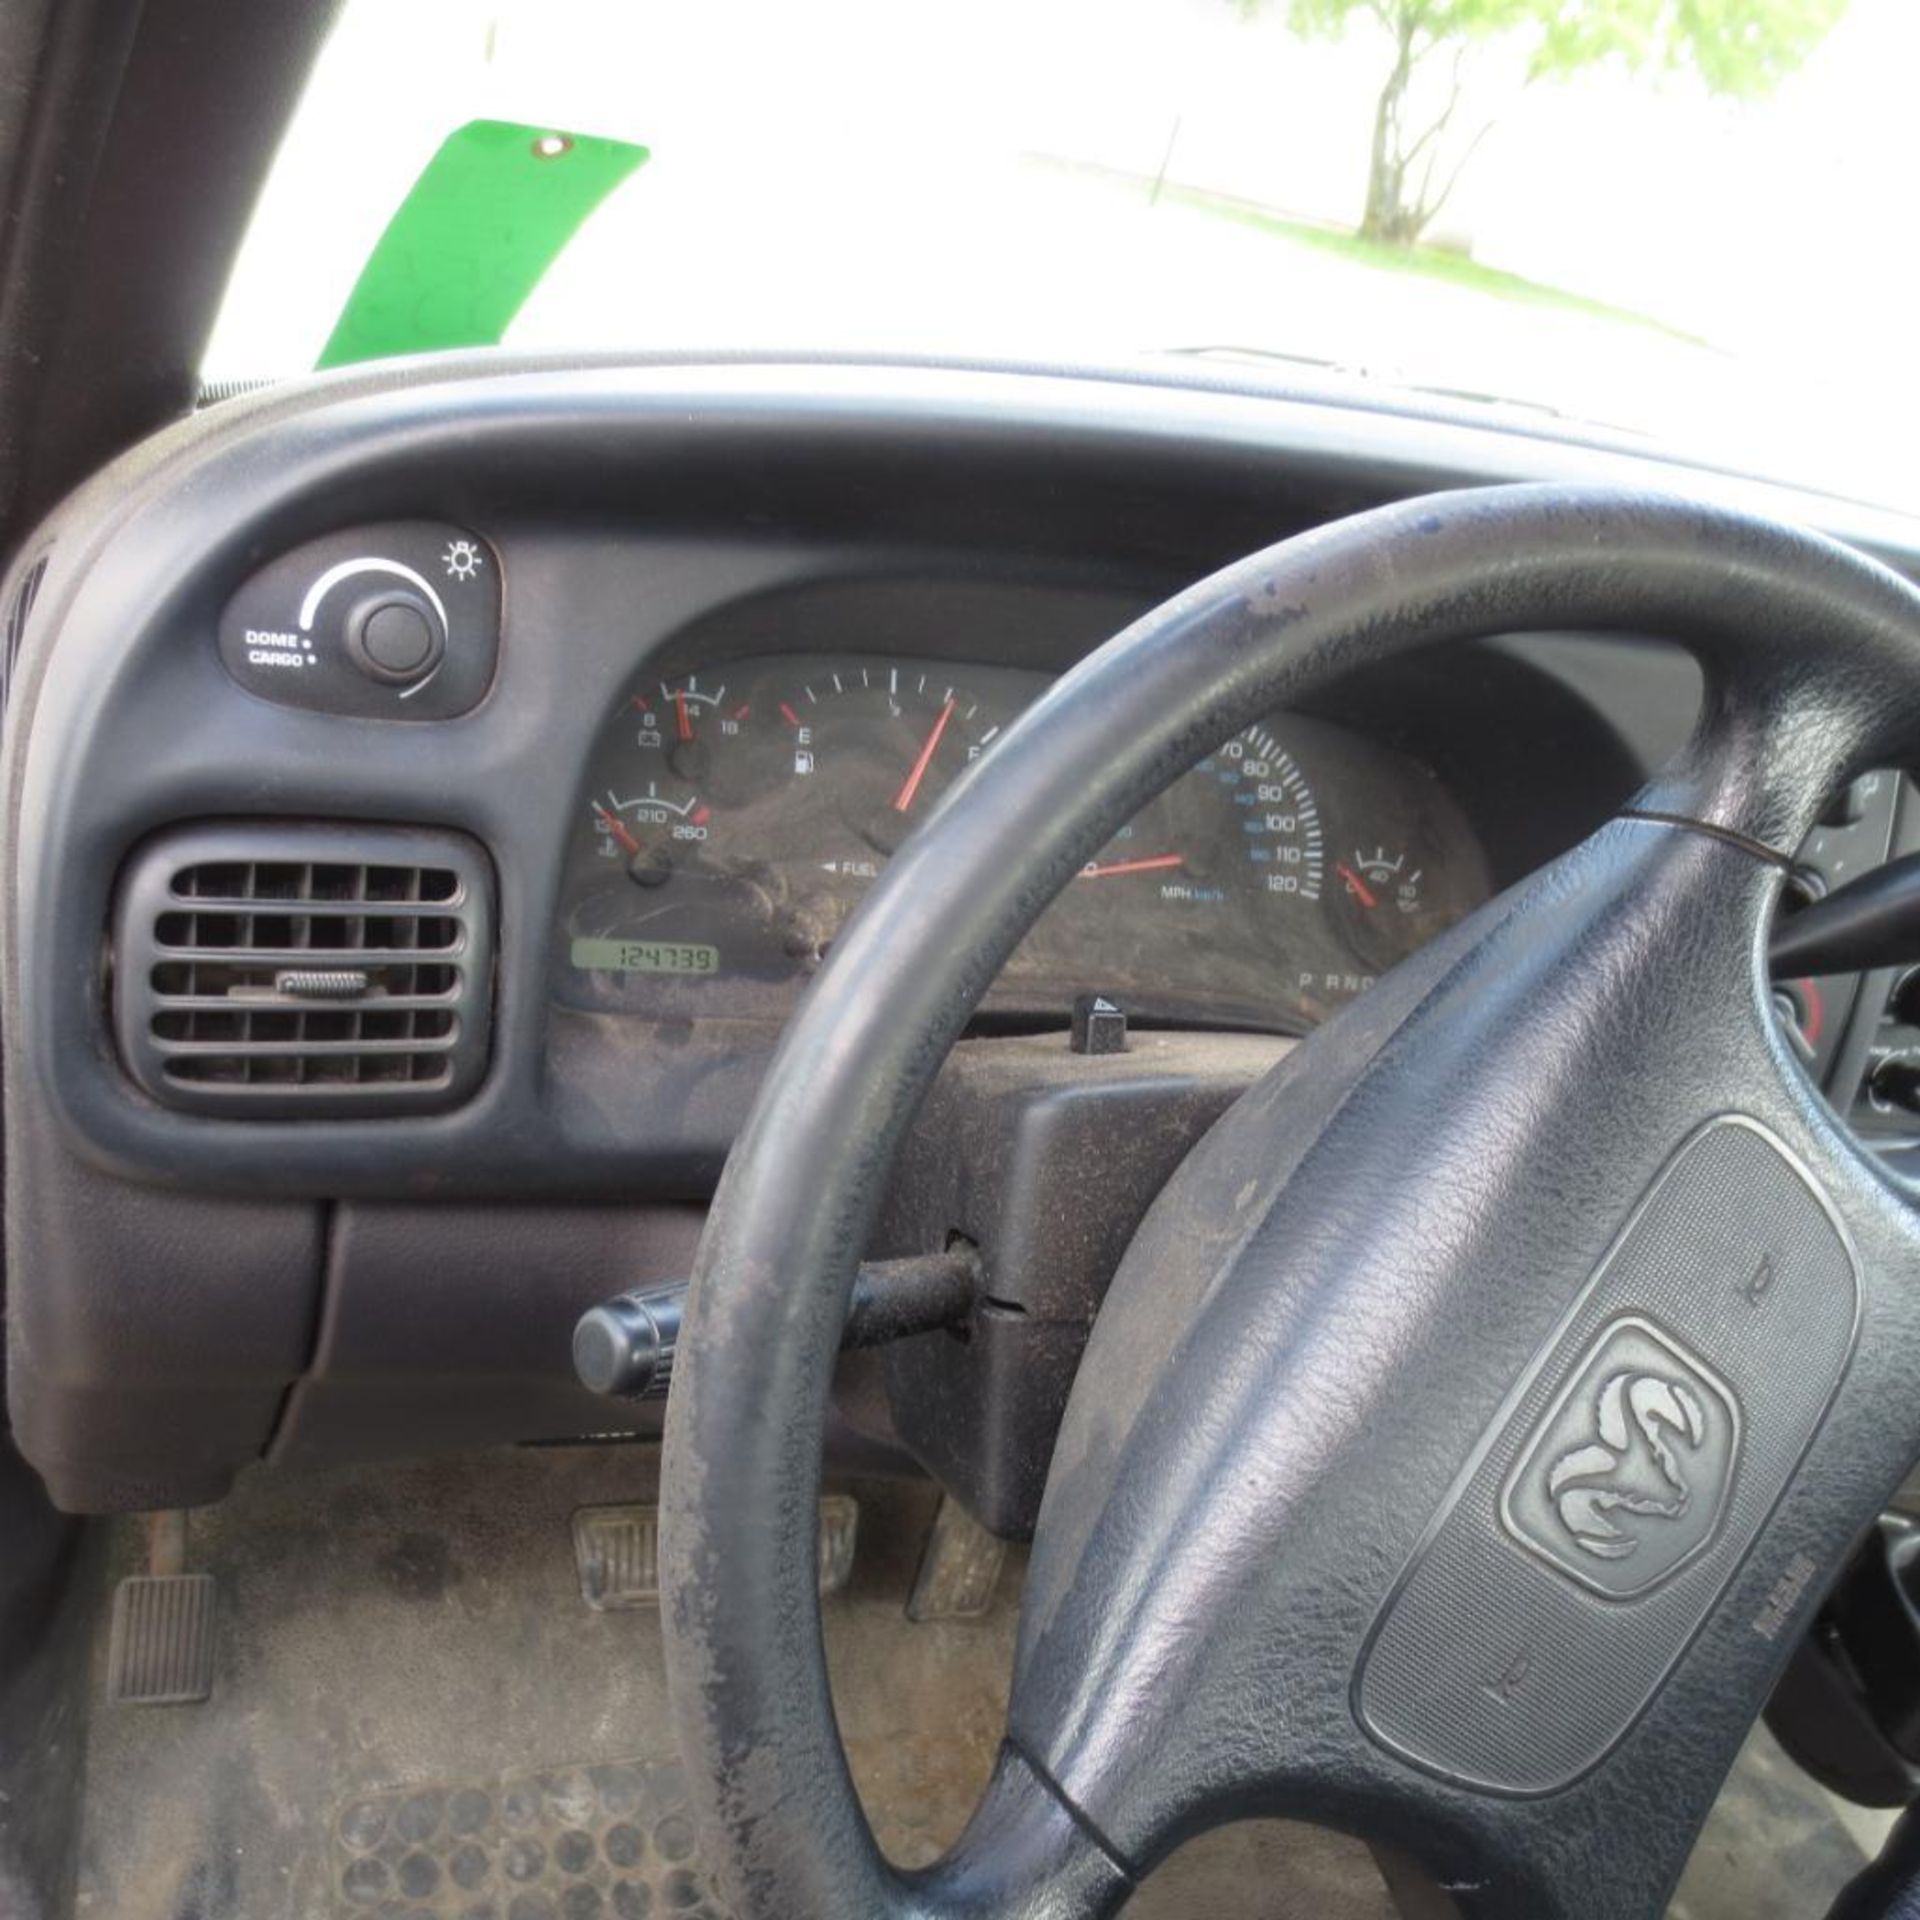 Dodge Ram 1500 Standard Cab Pickup Truck Vin: 1B7HC16Y0WS744787 (1998), 5.2L V-8, A/T, 124,739 Miles - Image 29 of 29